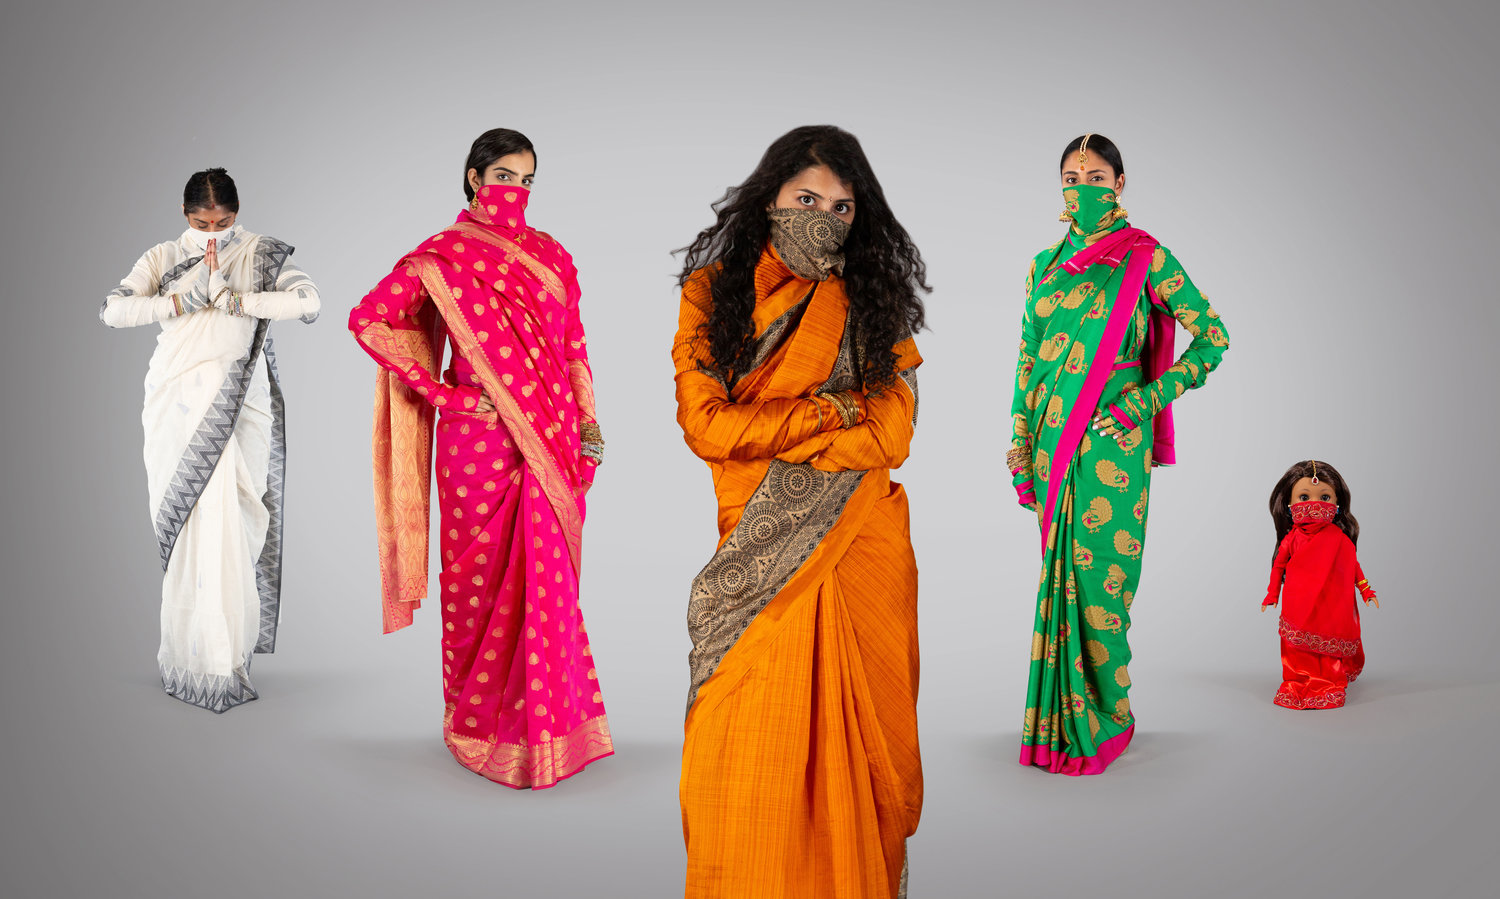 Super Sanskari Saree Rape-Proof clothing